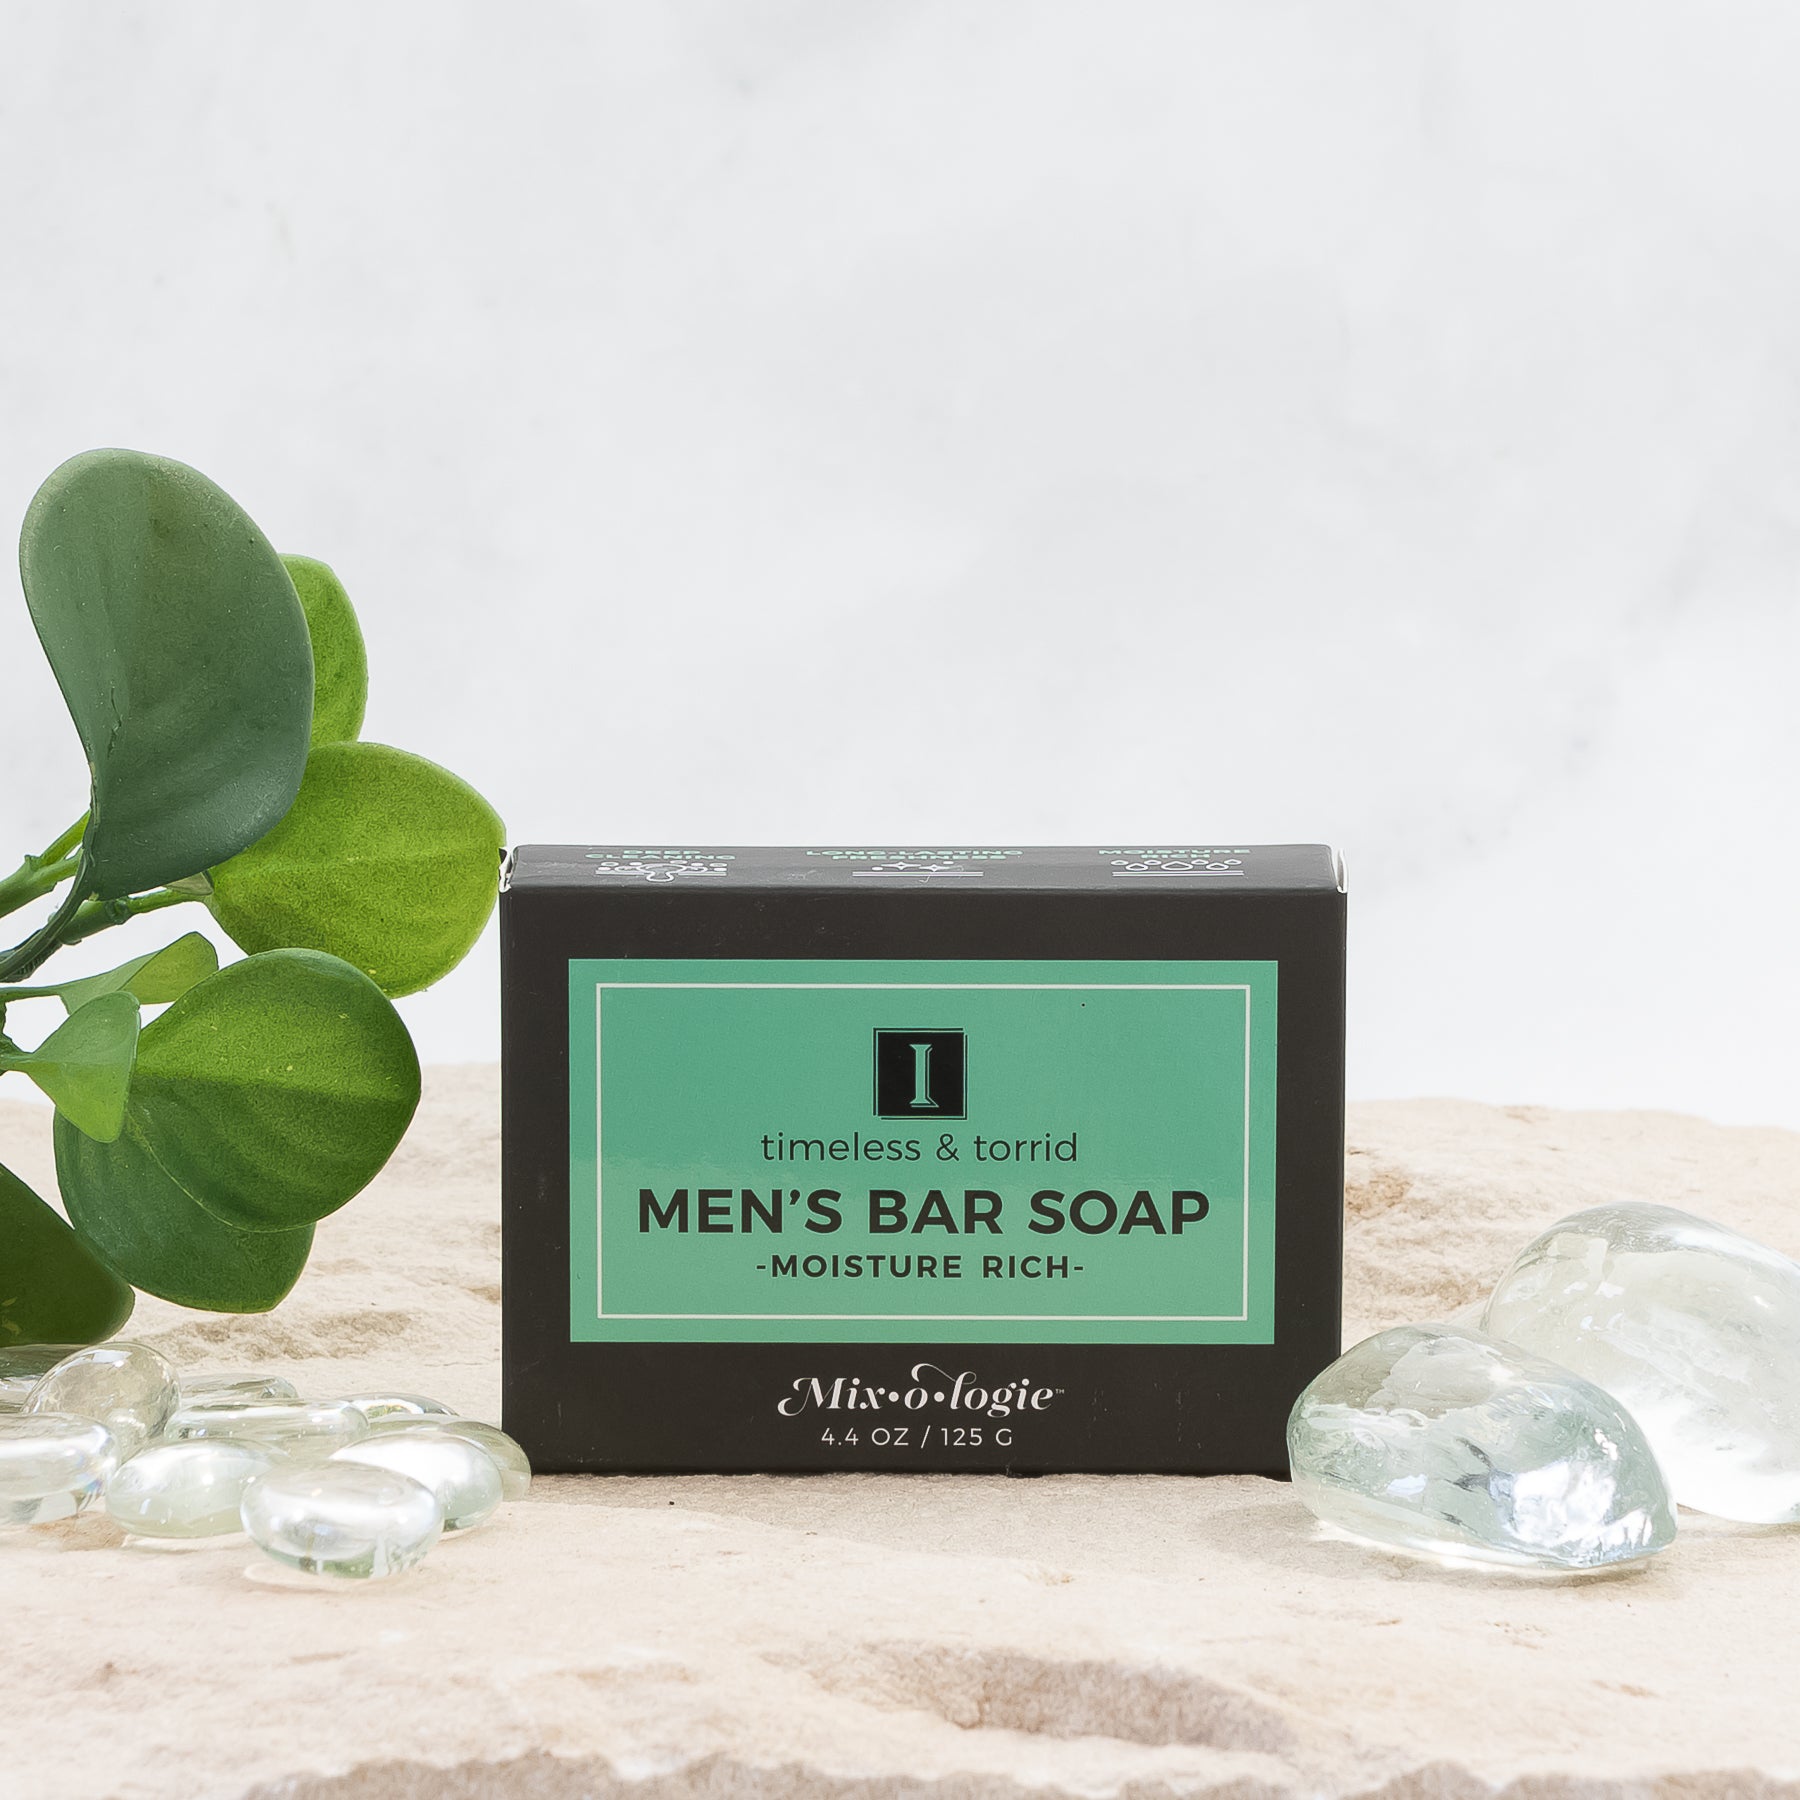 Mixologie Bar Soap - Men's I (Timeless and Torrid) Scent